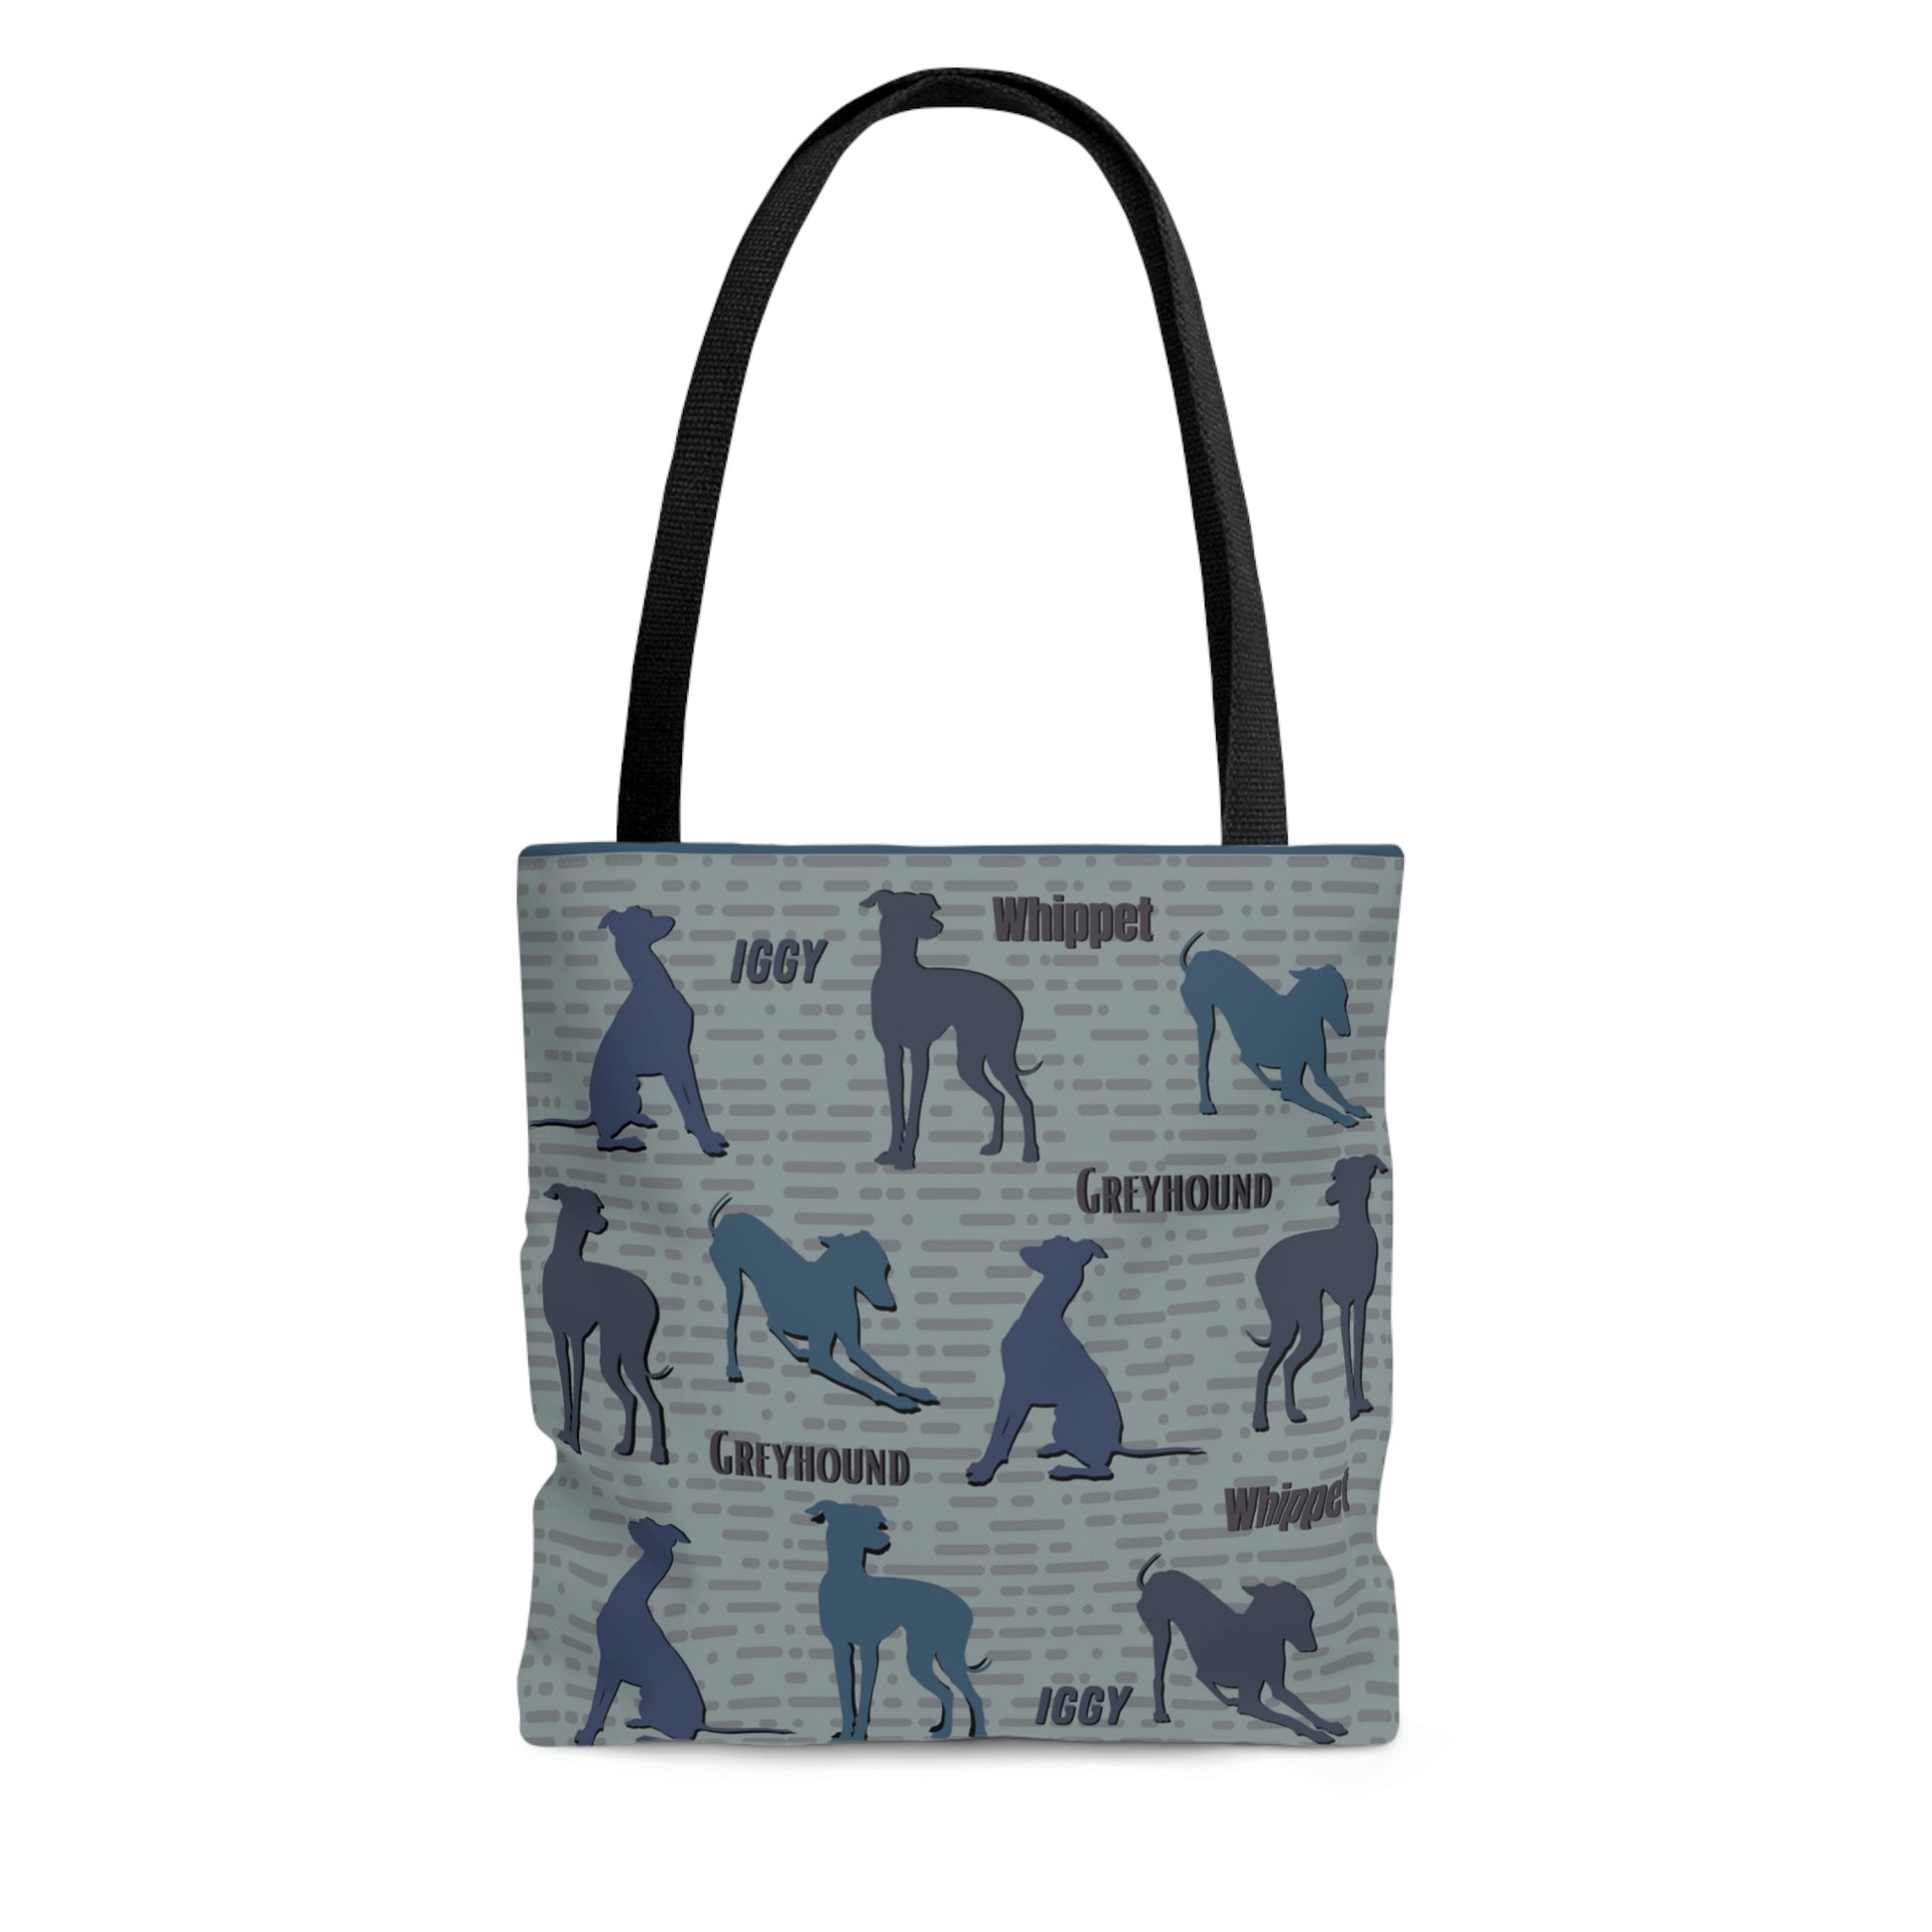 IG, Whippet, Greyhound Tote Bag, Modern, and Practical Bag, Original Design! - The Dapper Dogg